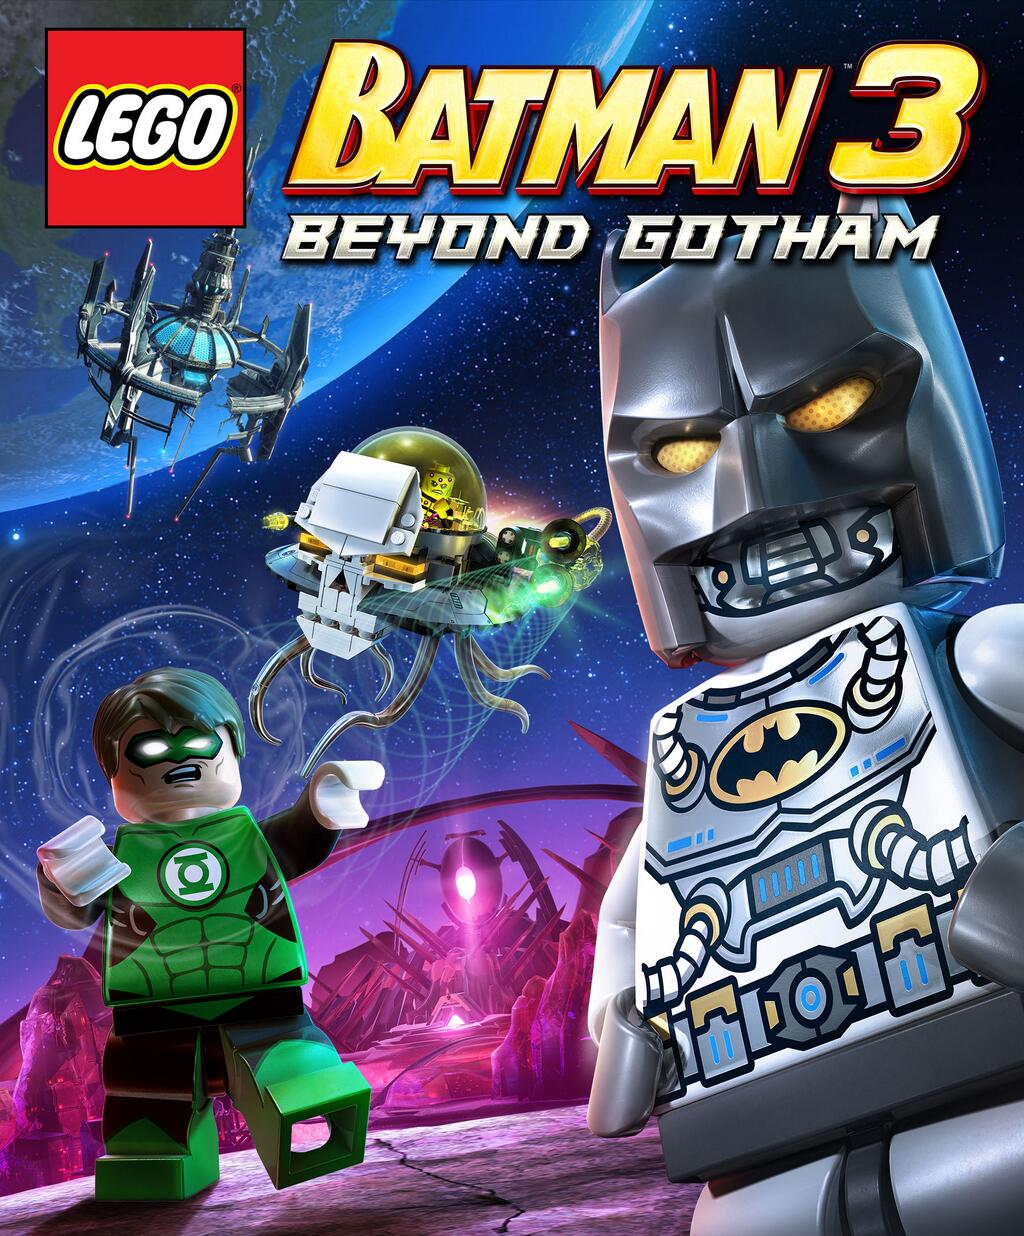 lego batman 3 characters that light up